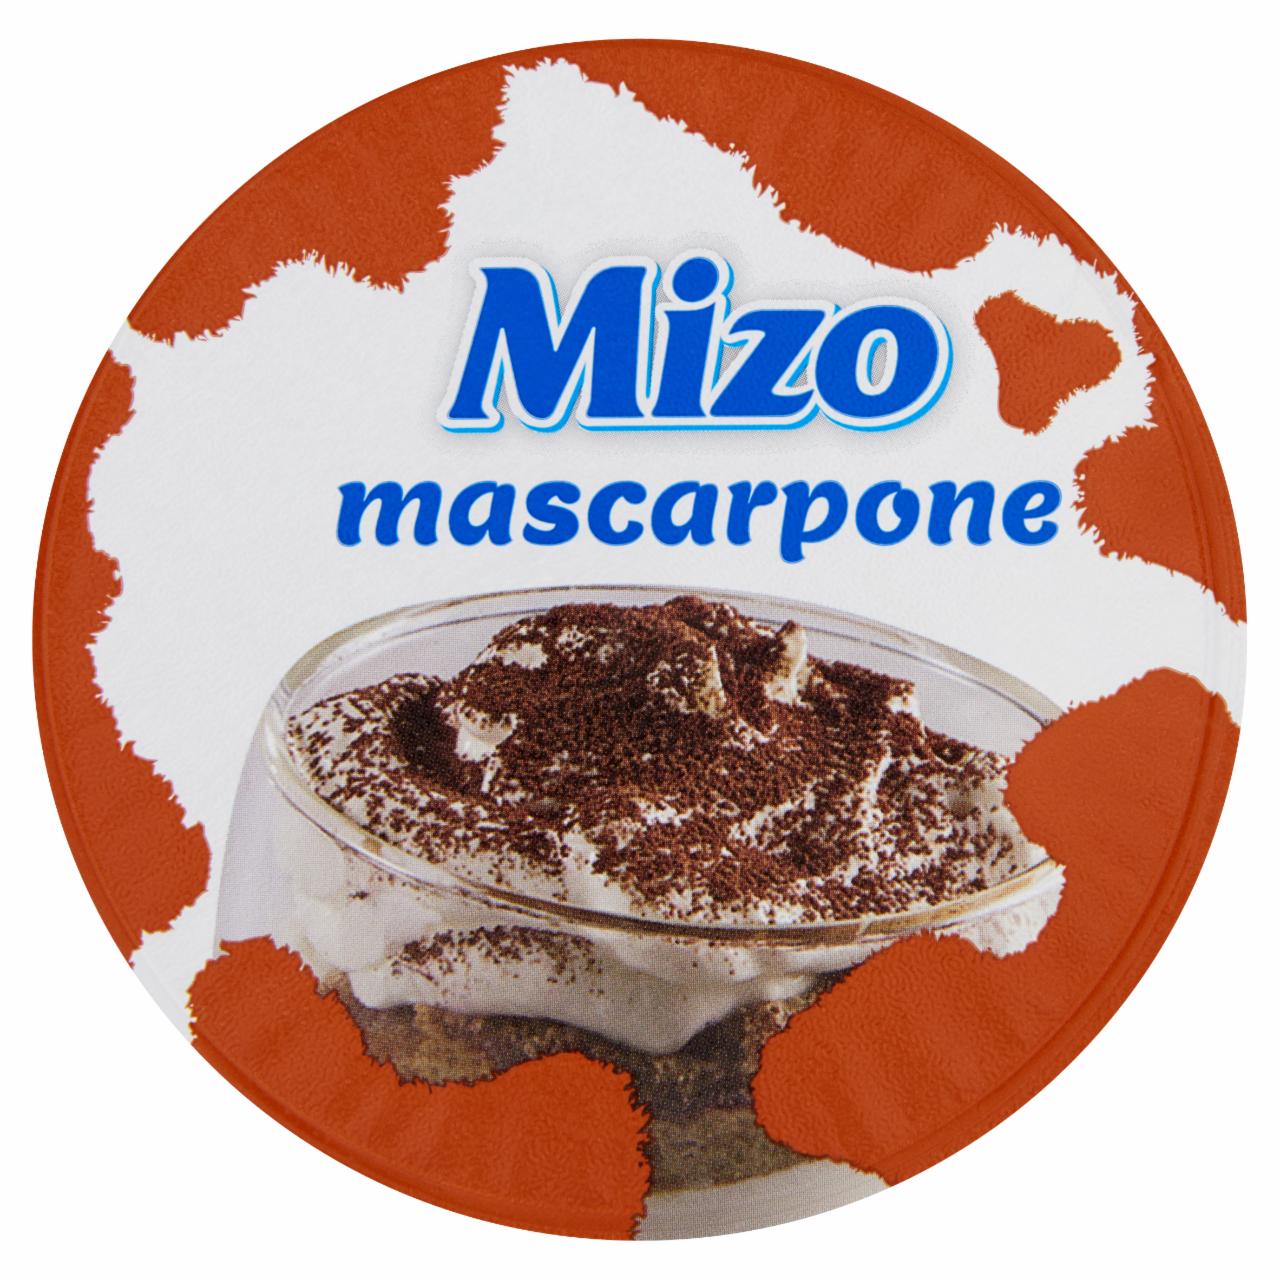 Képek - Mizo mascarpone krémsajt 250 g